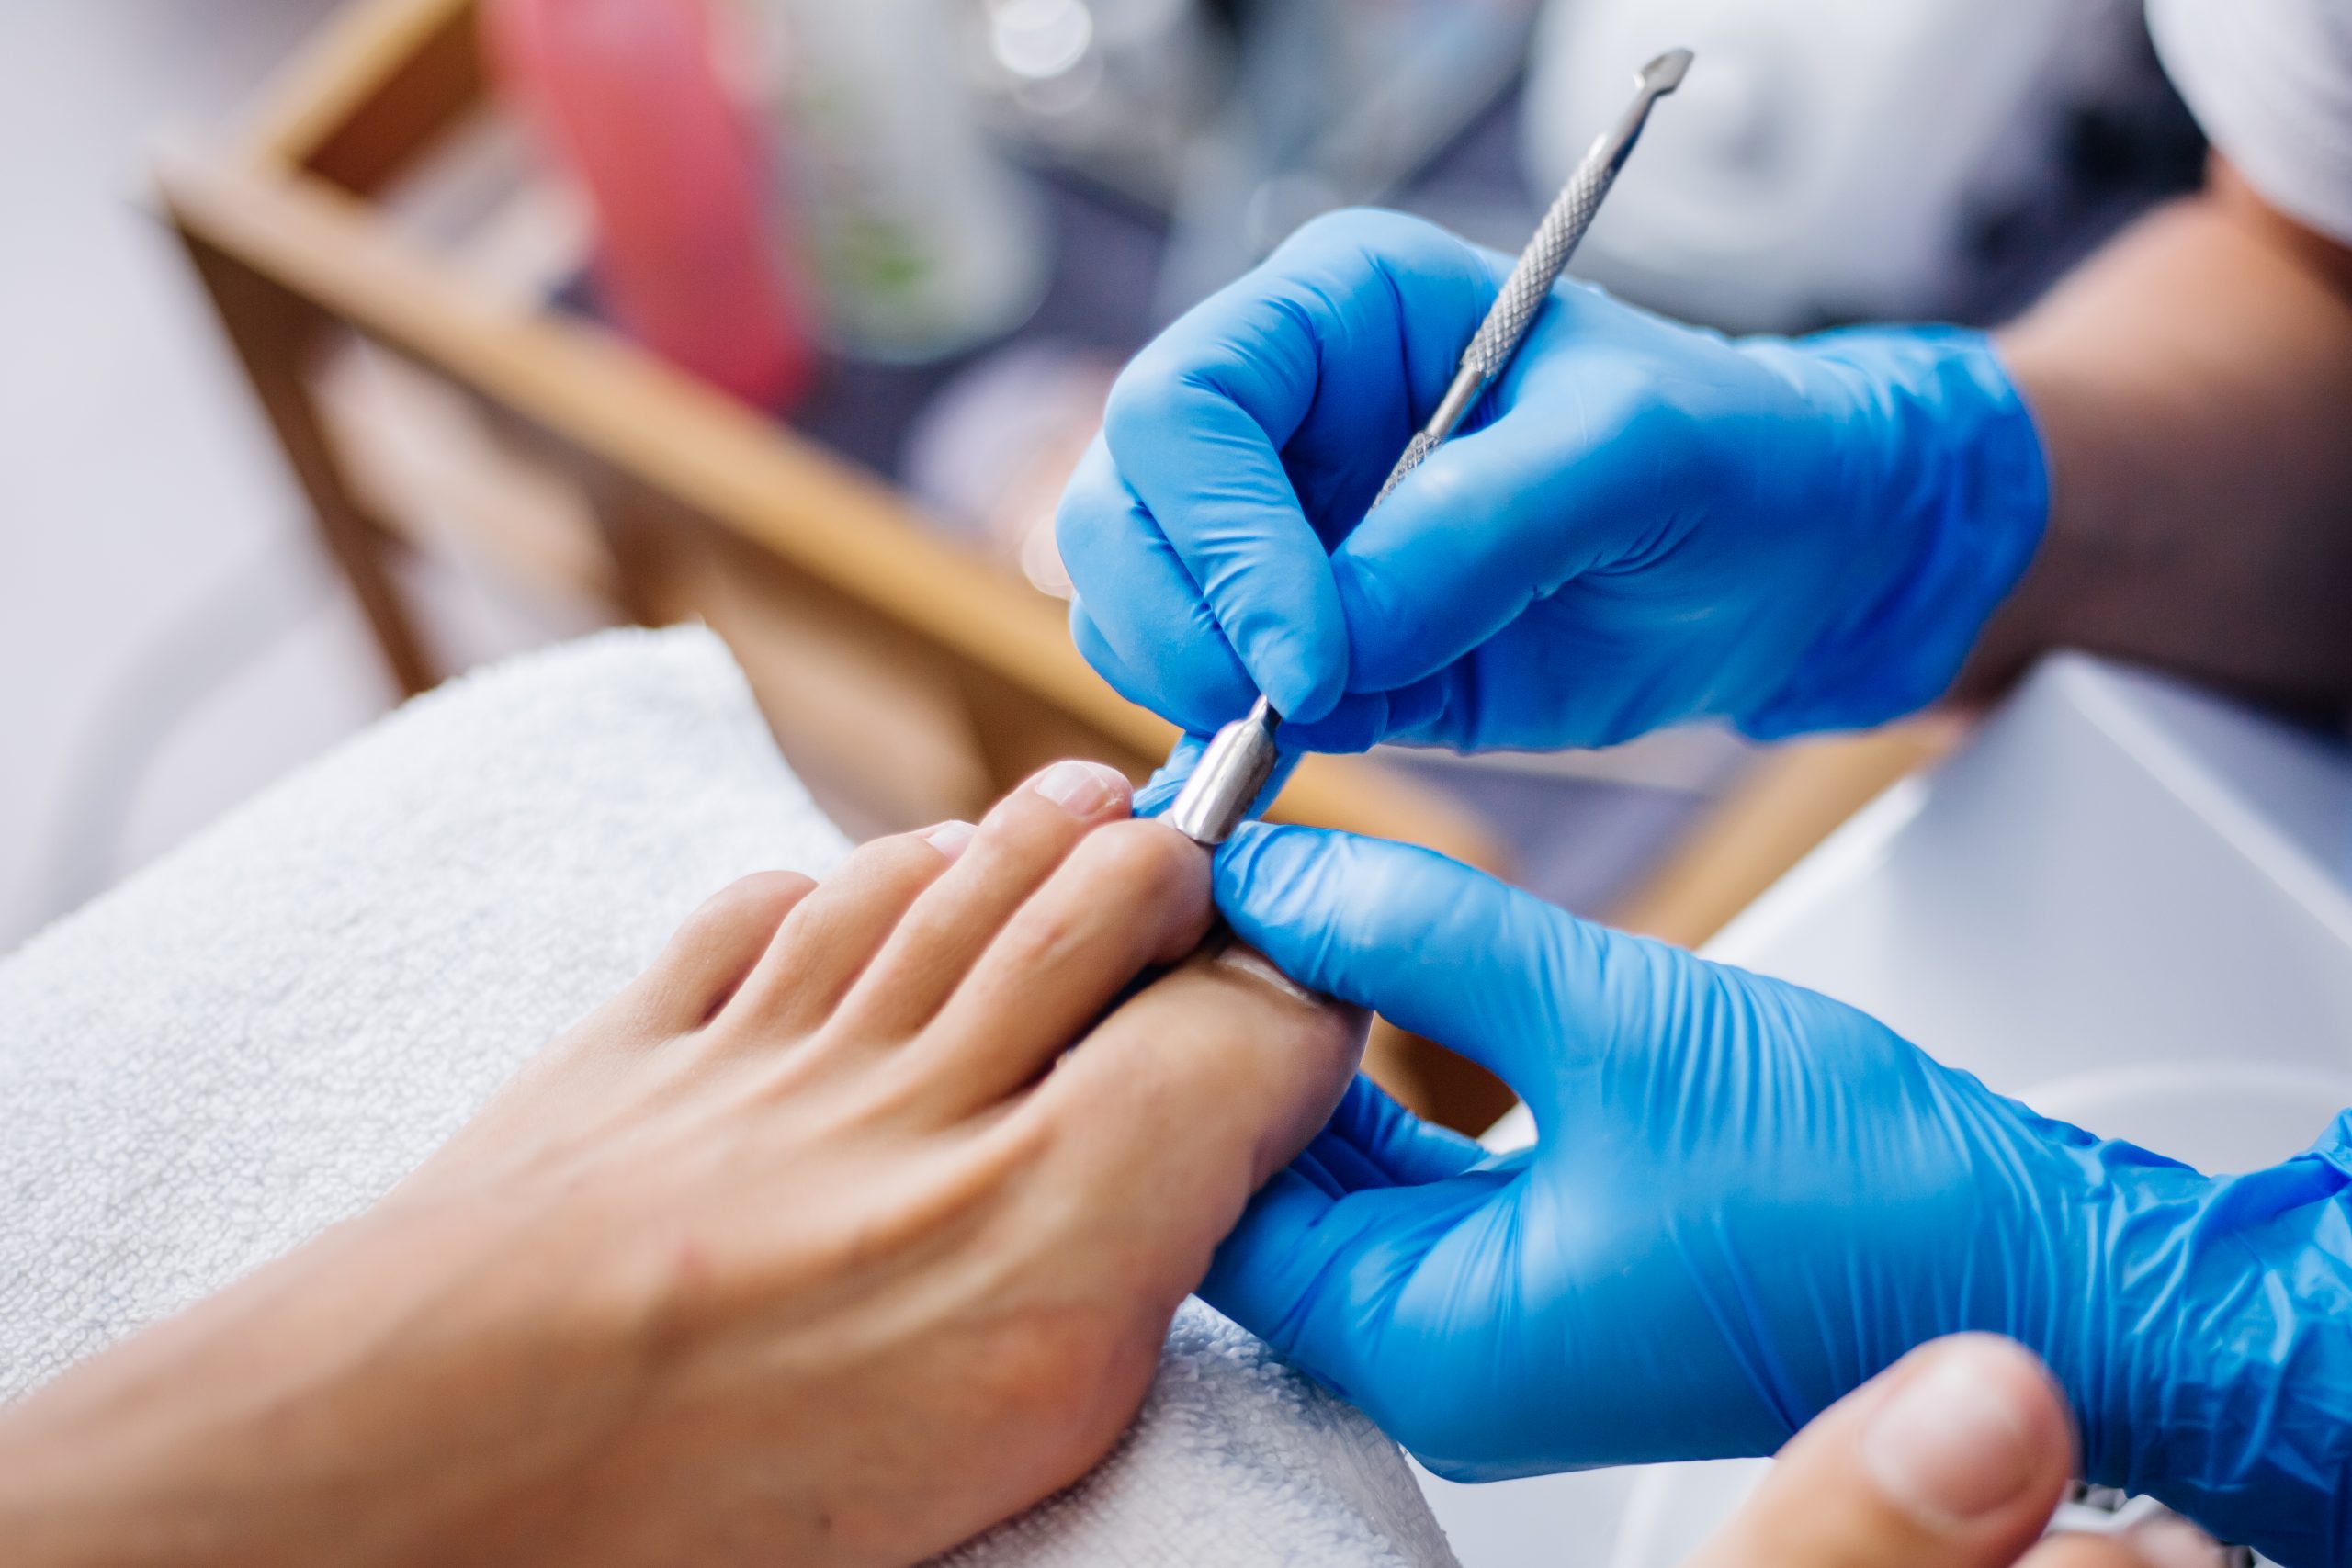 pedicure-process-home-salon-pedicure-foot-care-treatment-nail-process-professional-pedicures-master-blue-gloves-make-pedicure-2